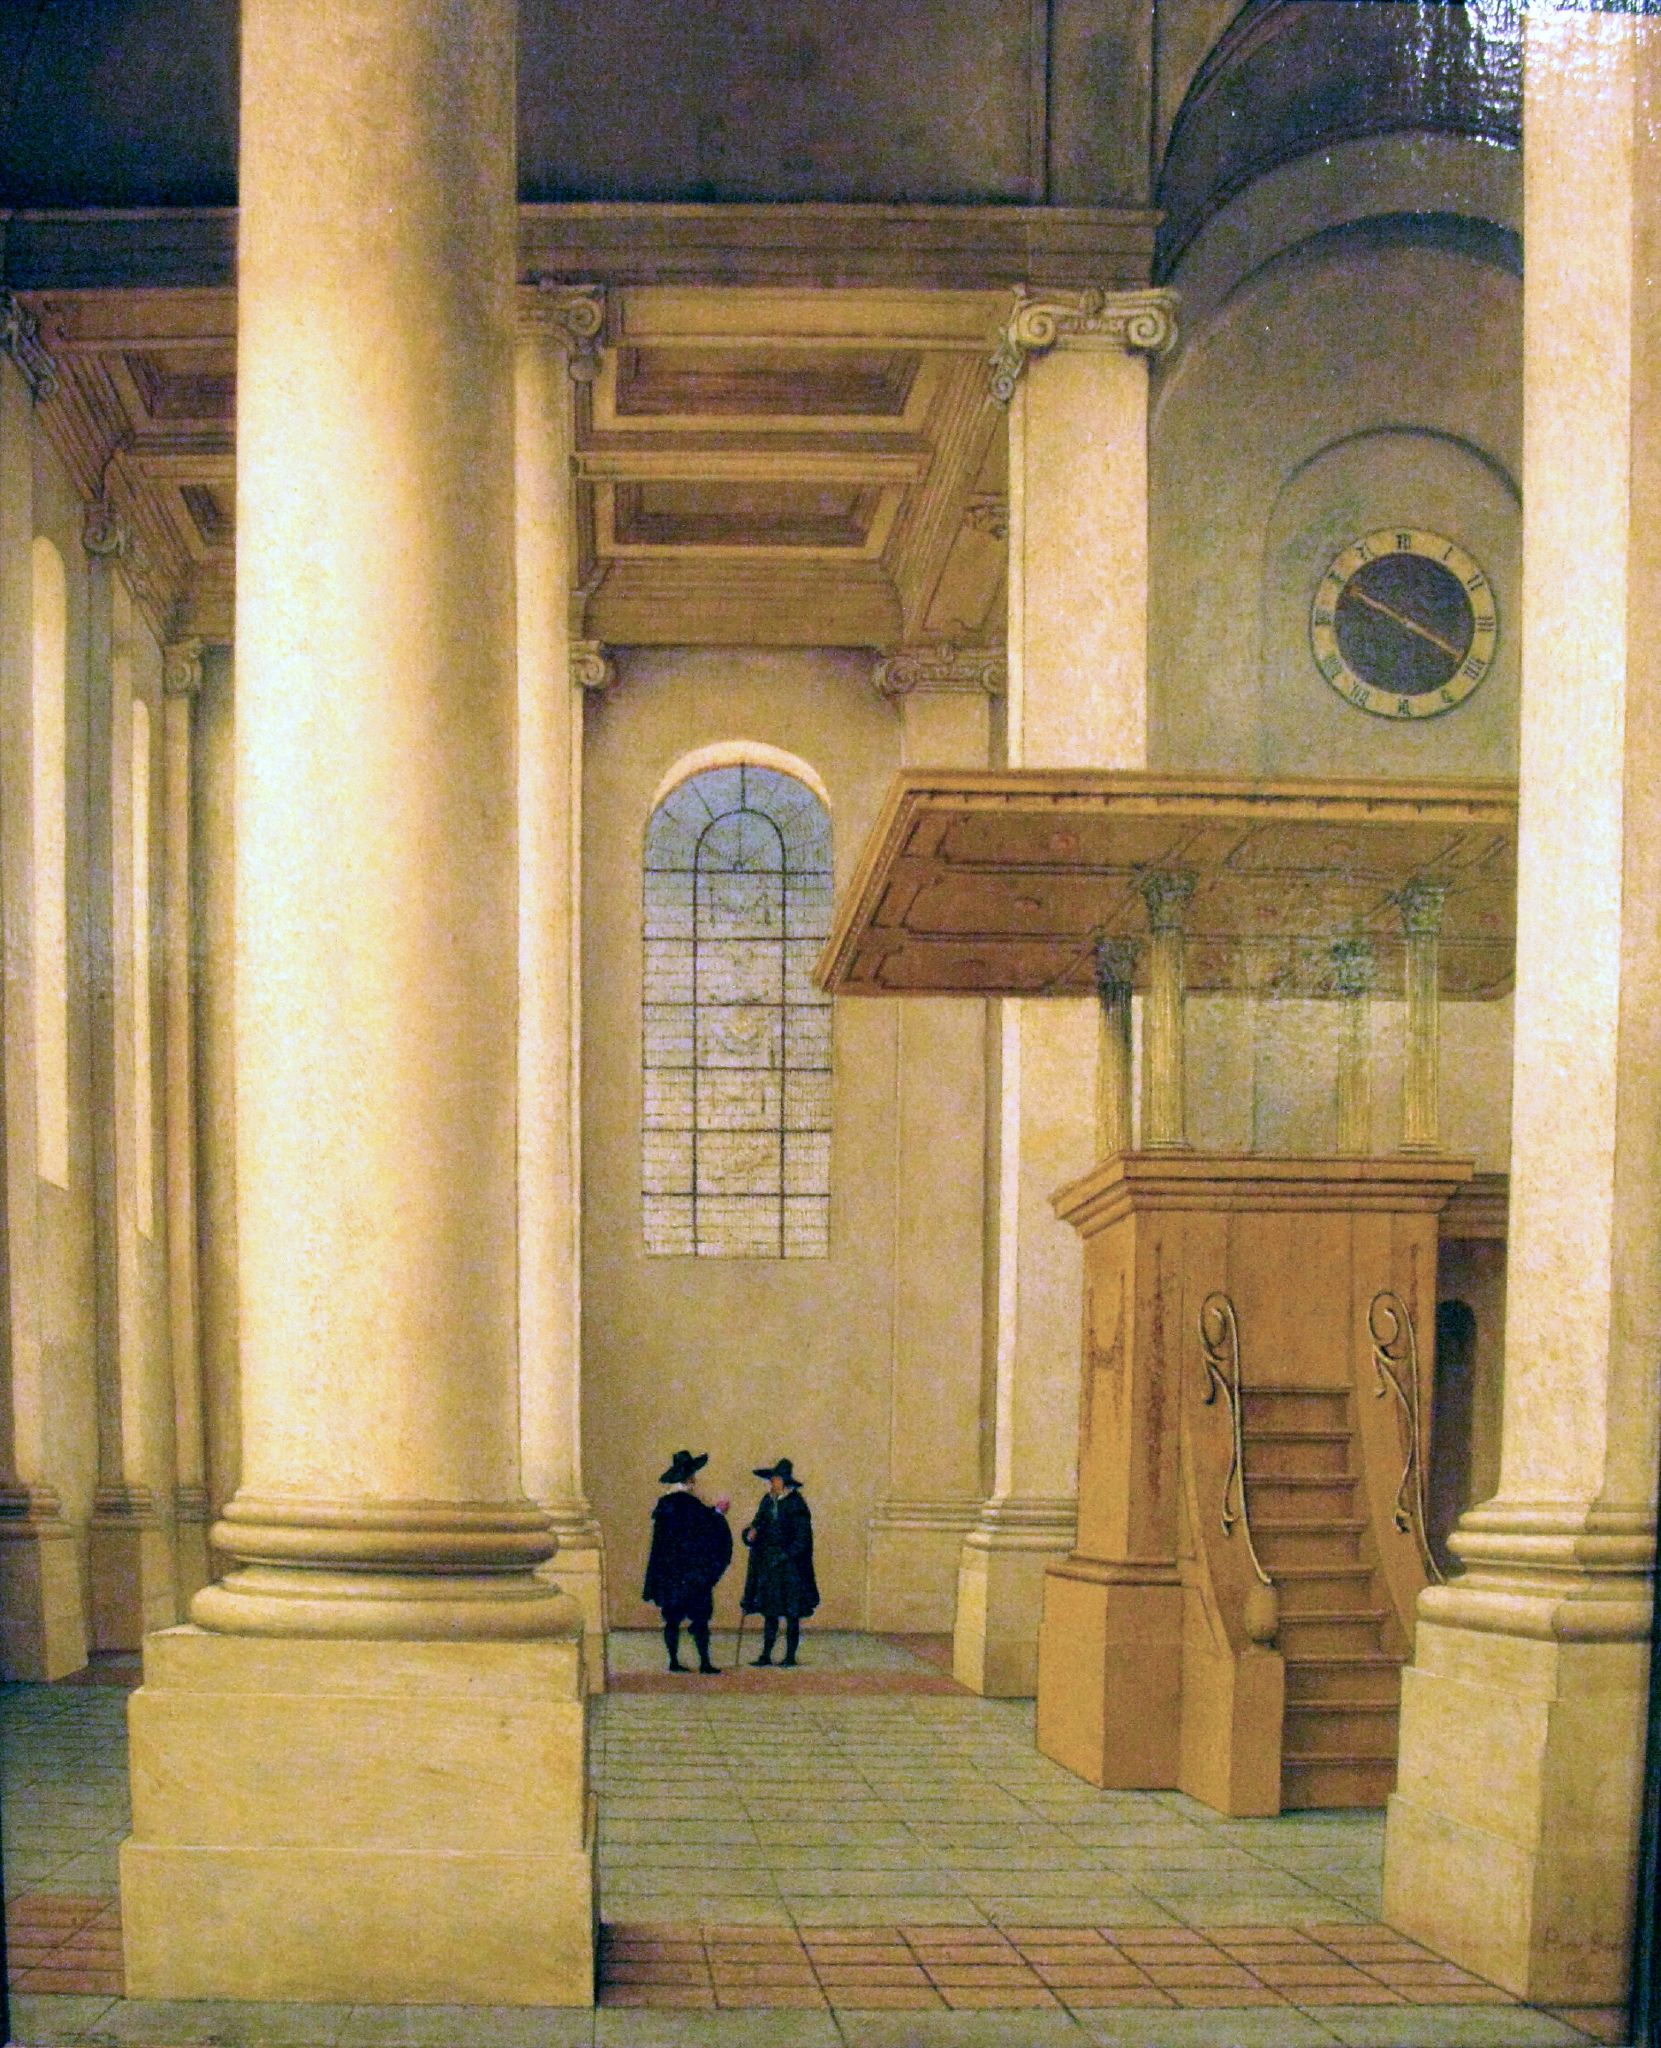 WLANL - andrevanb - Interieur van de Nieuwe Kerk te Haarlem, Pieter Saenredam, 1655